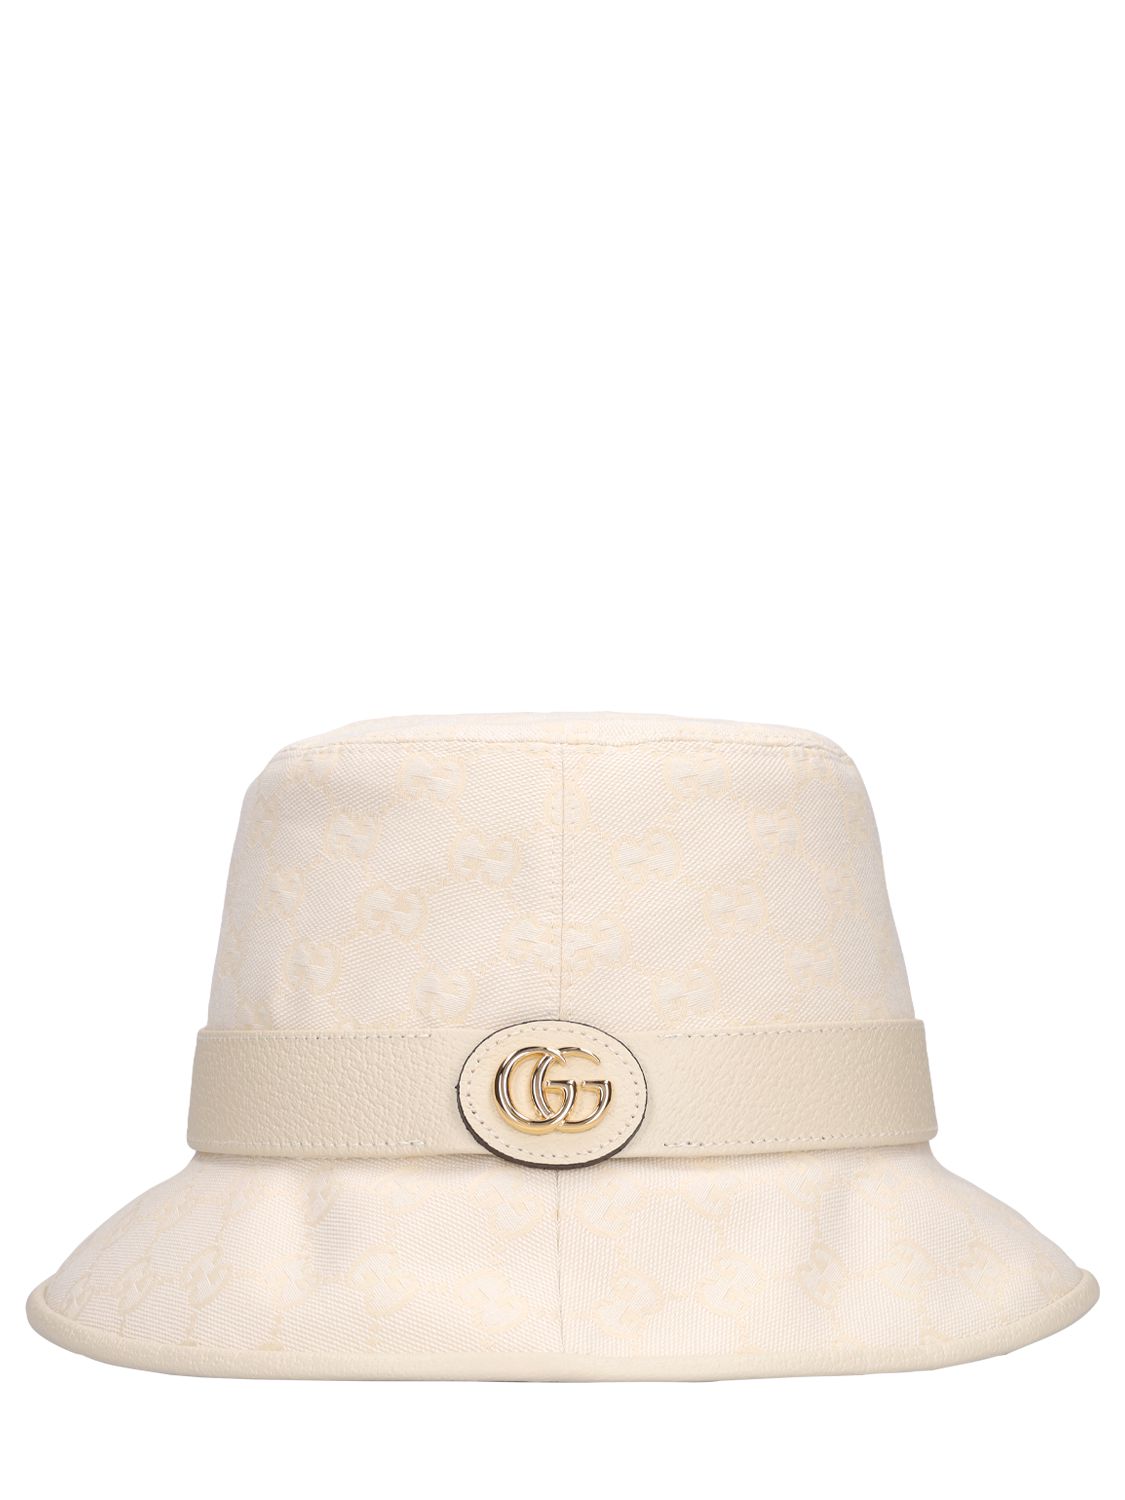 Gg Jago Cotton Blend Canvas Bucket Hat